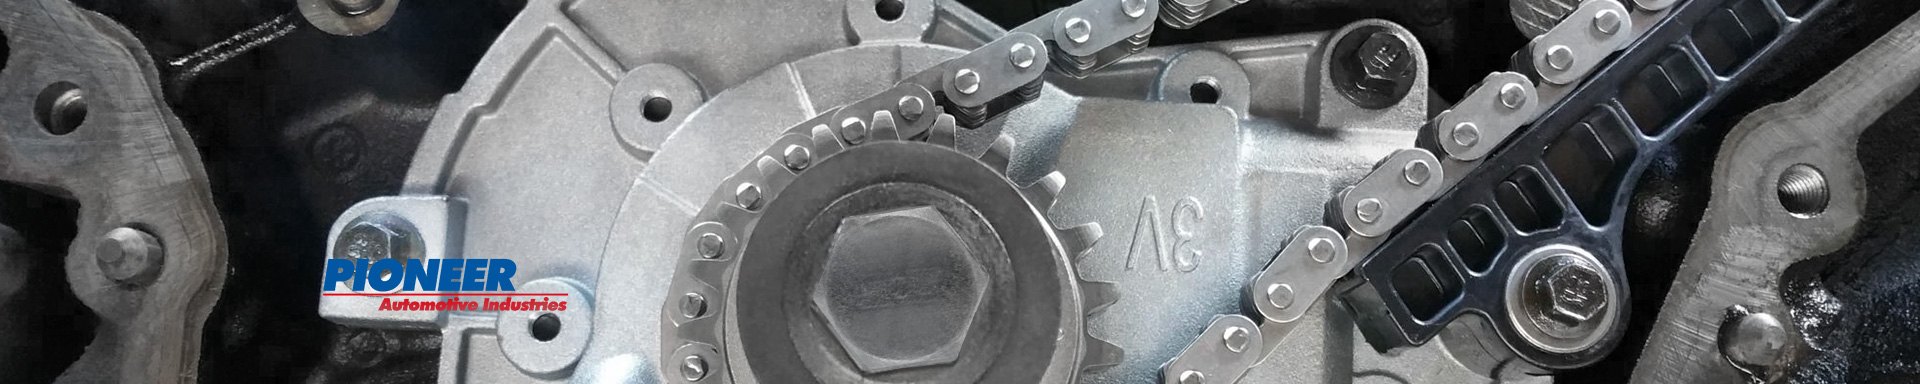 Pioneer Automotive Engine Service Tools